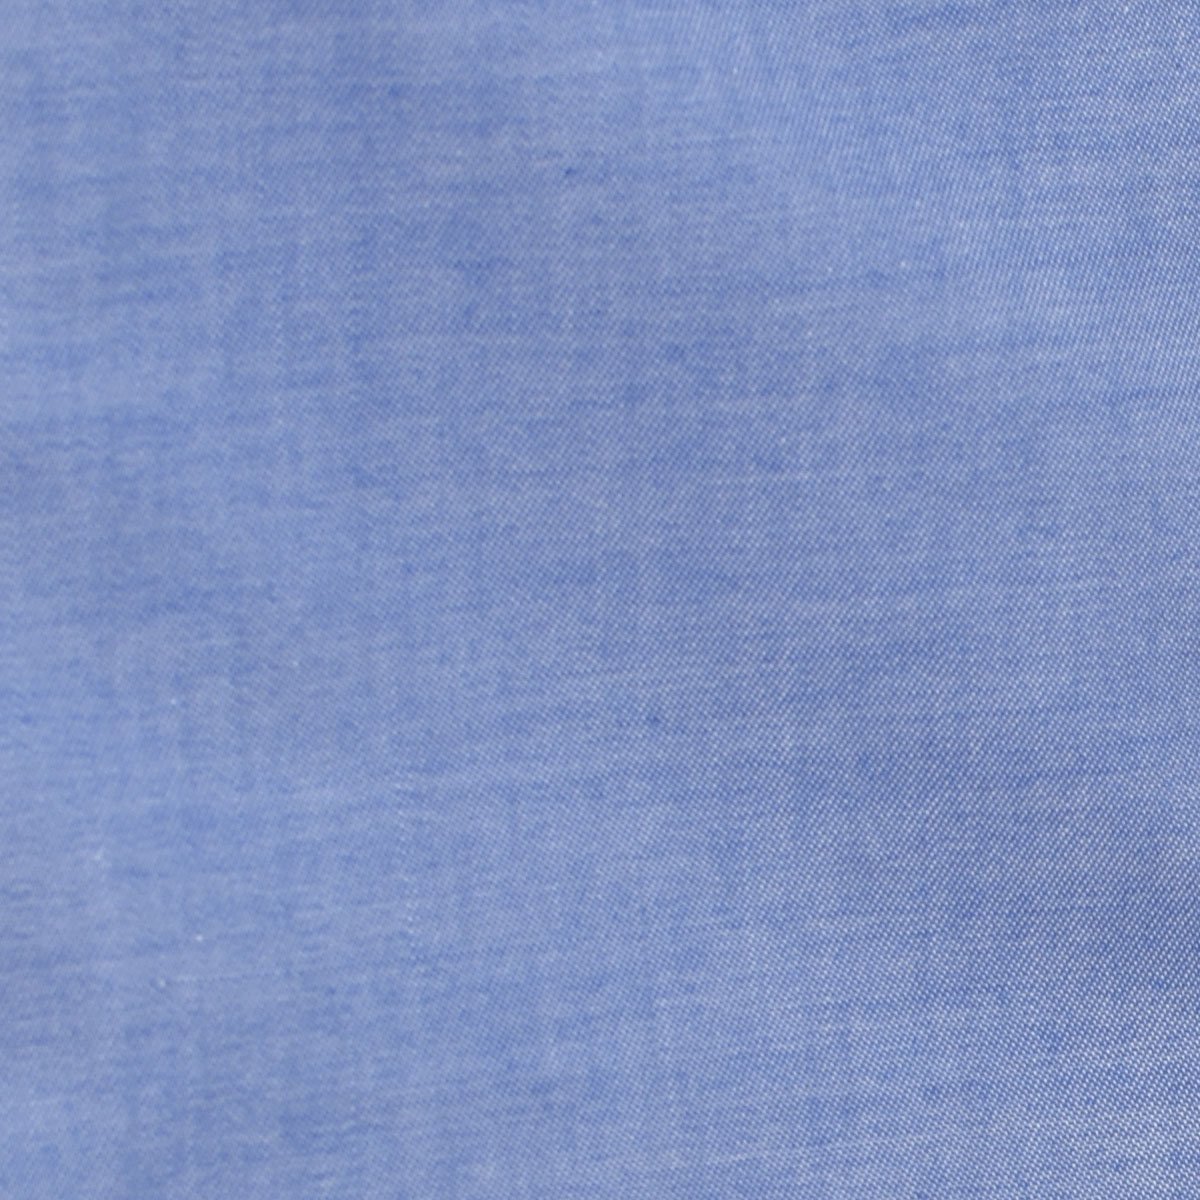 Camisa Casual  Manga Corta Azul Carlo Corinto Sport para Caballero